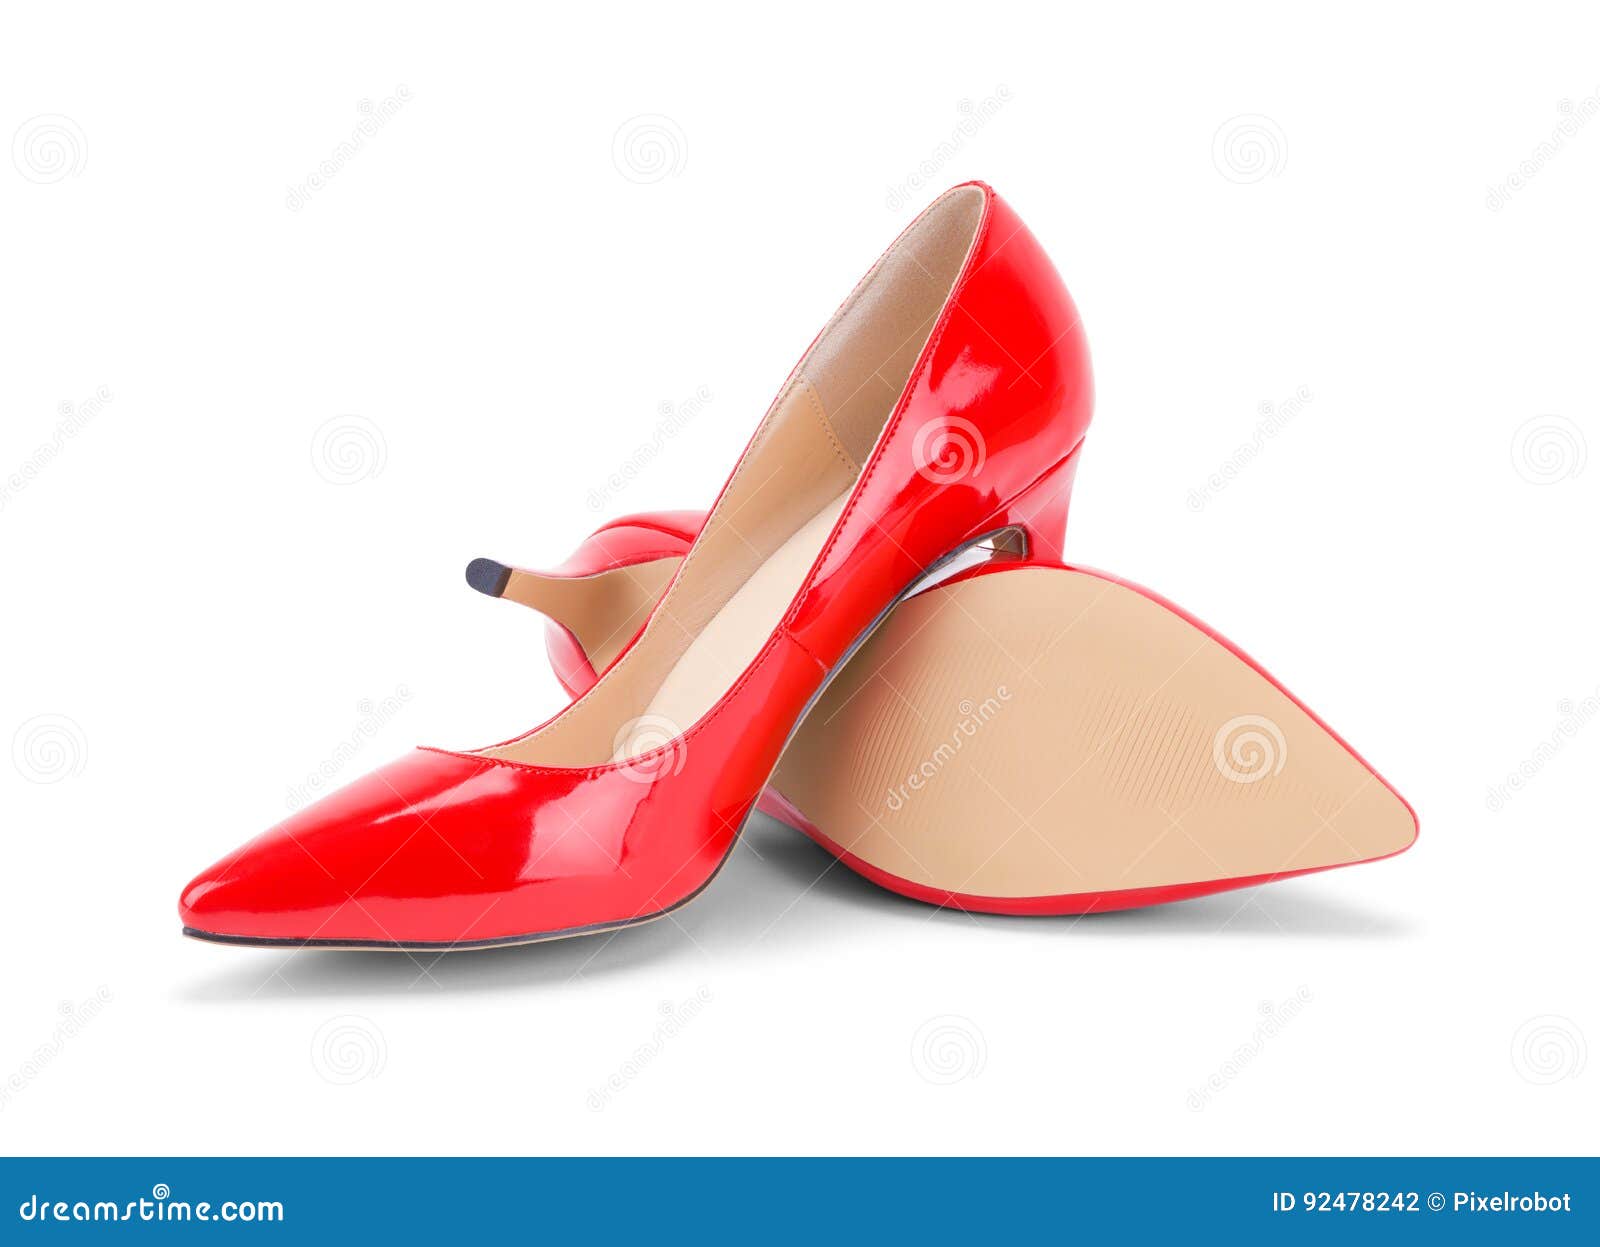 red high heels off